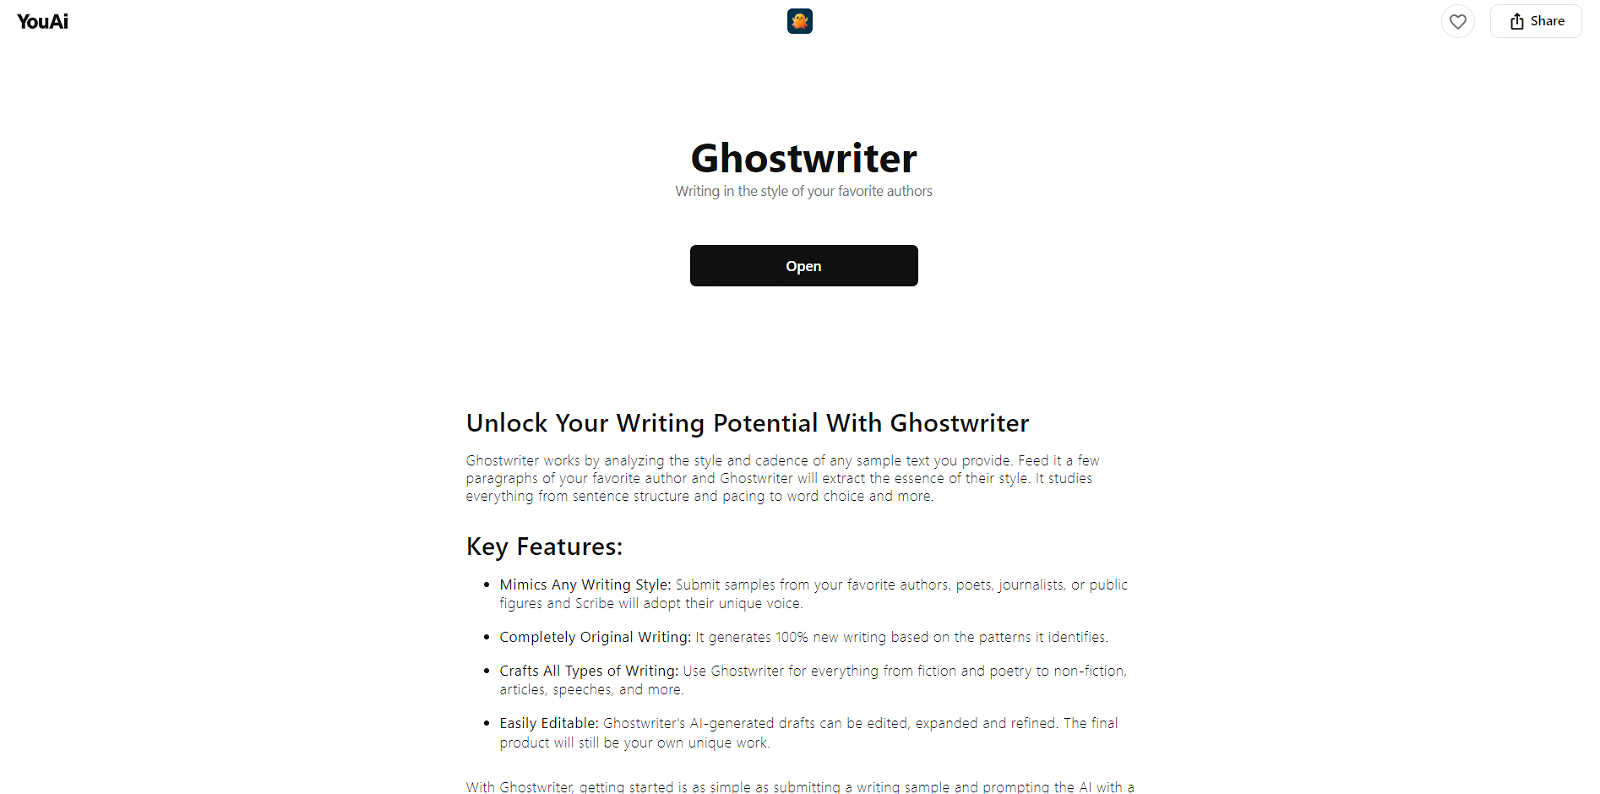 Ghostwriter by YouAI website